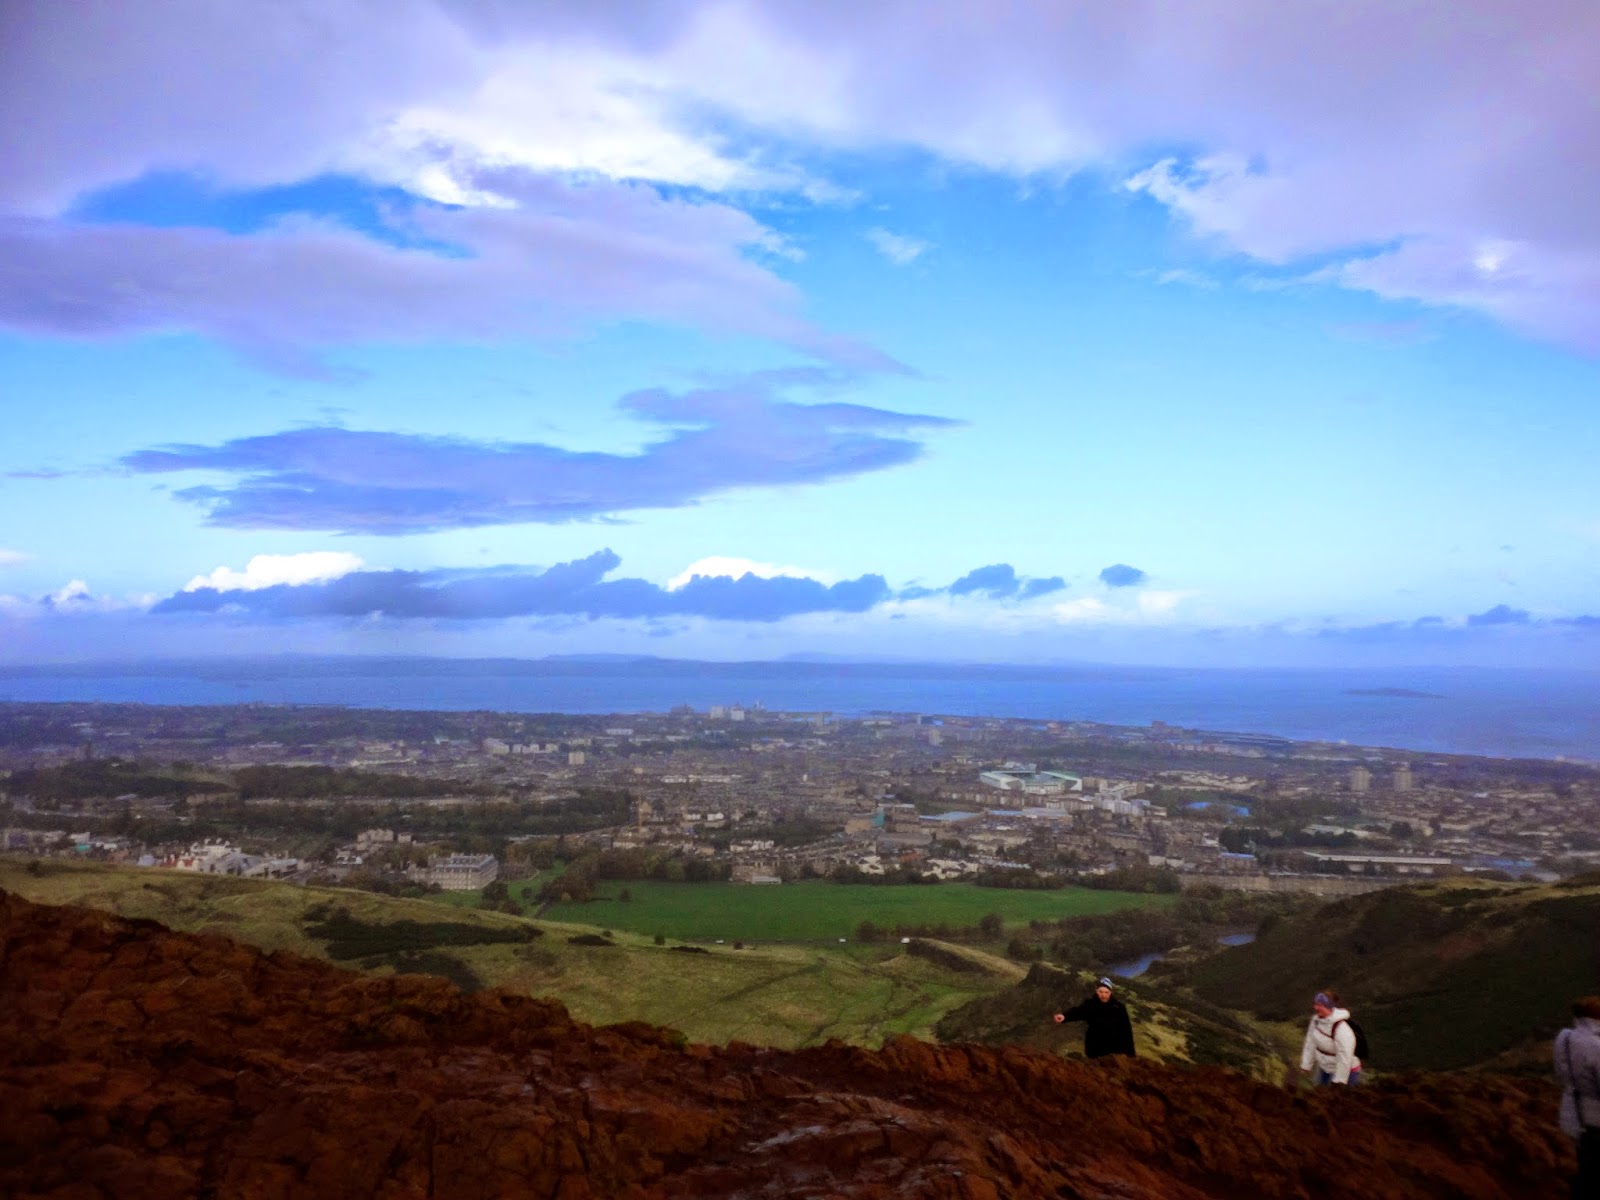 View of Edinburgh from Arthur's Seat